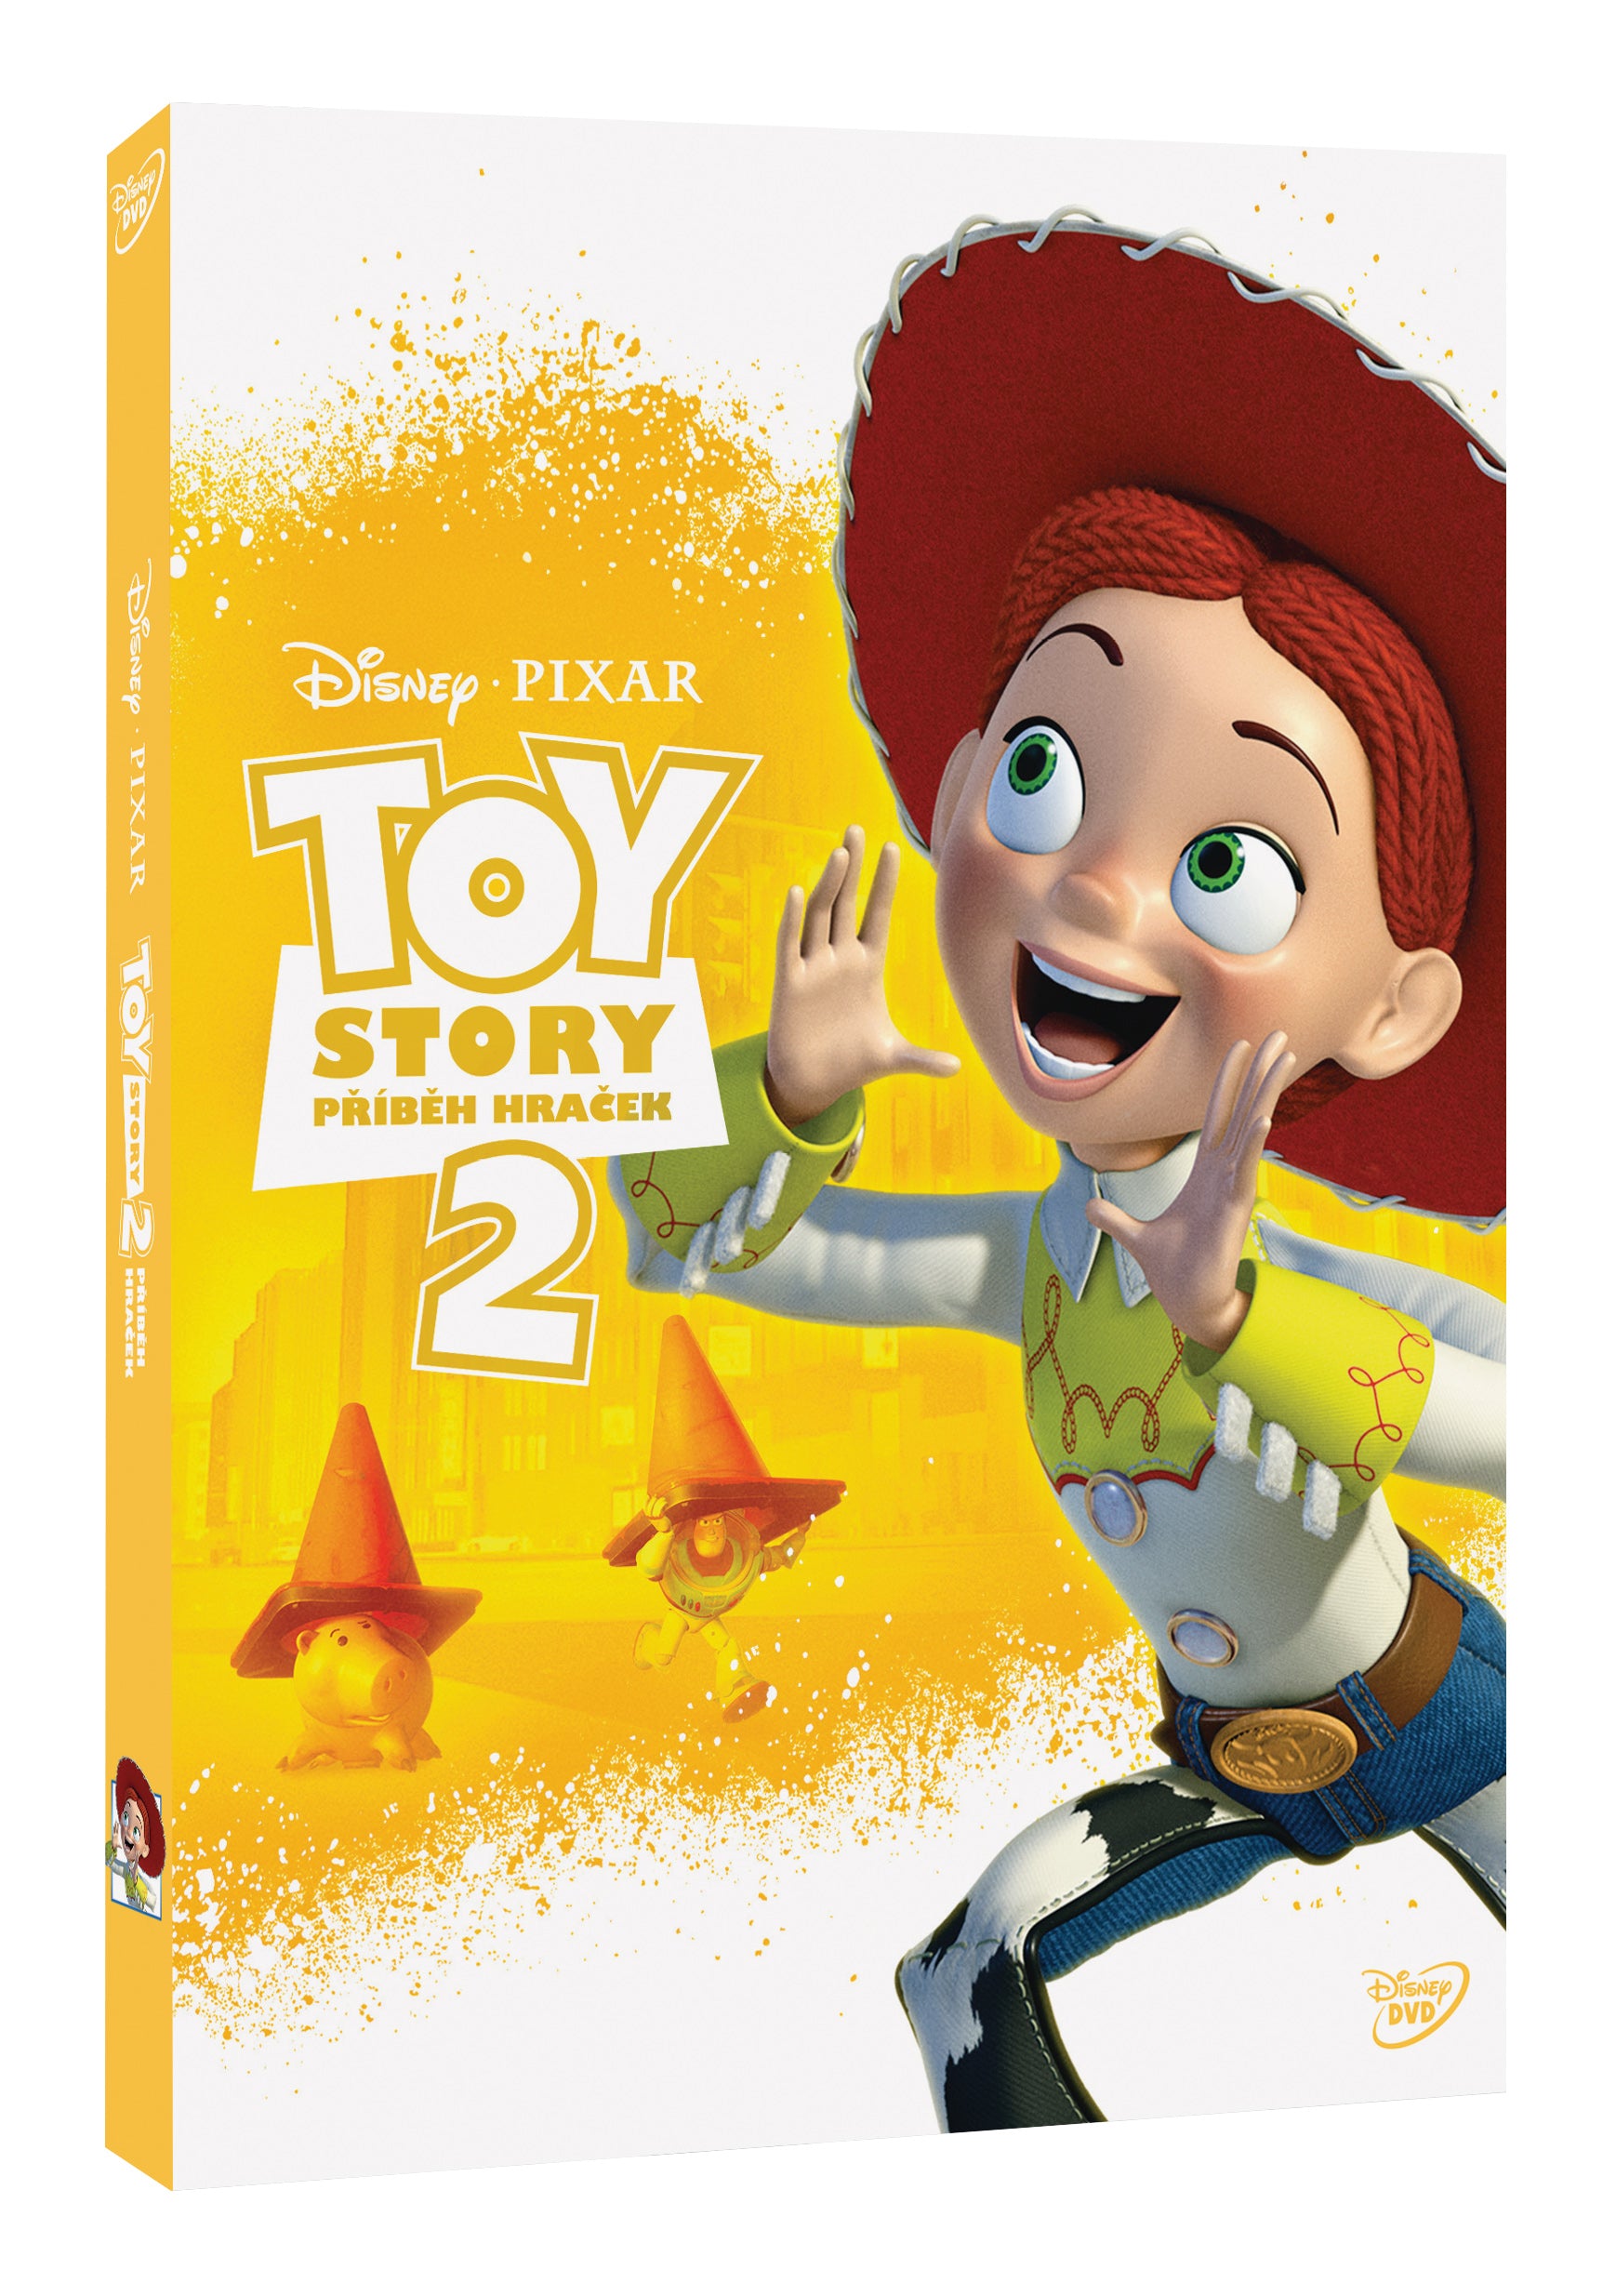 Toy Story 2: Pribeh hracek SE DVD – Edice Pixar New Line / Toy Story 2 Special Edition